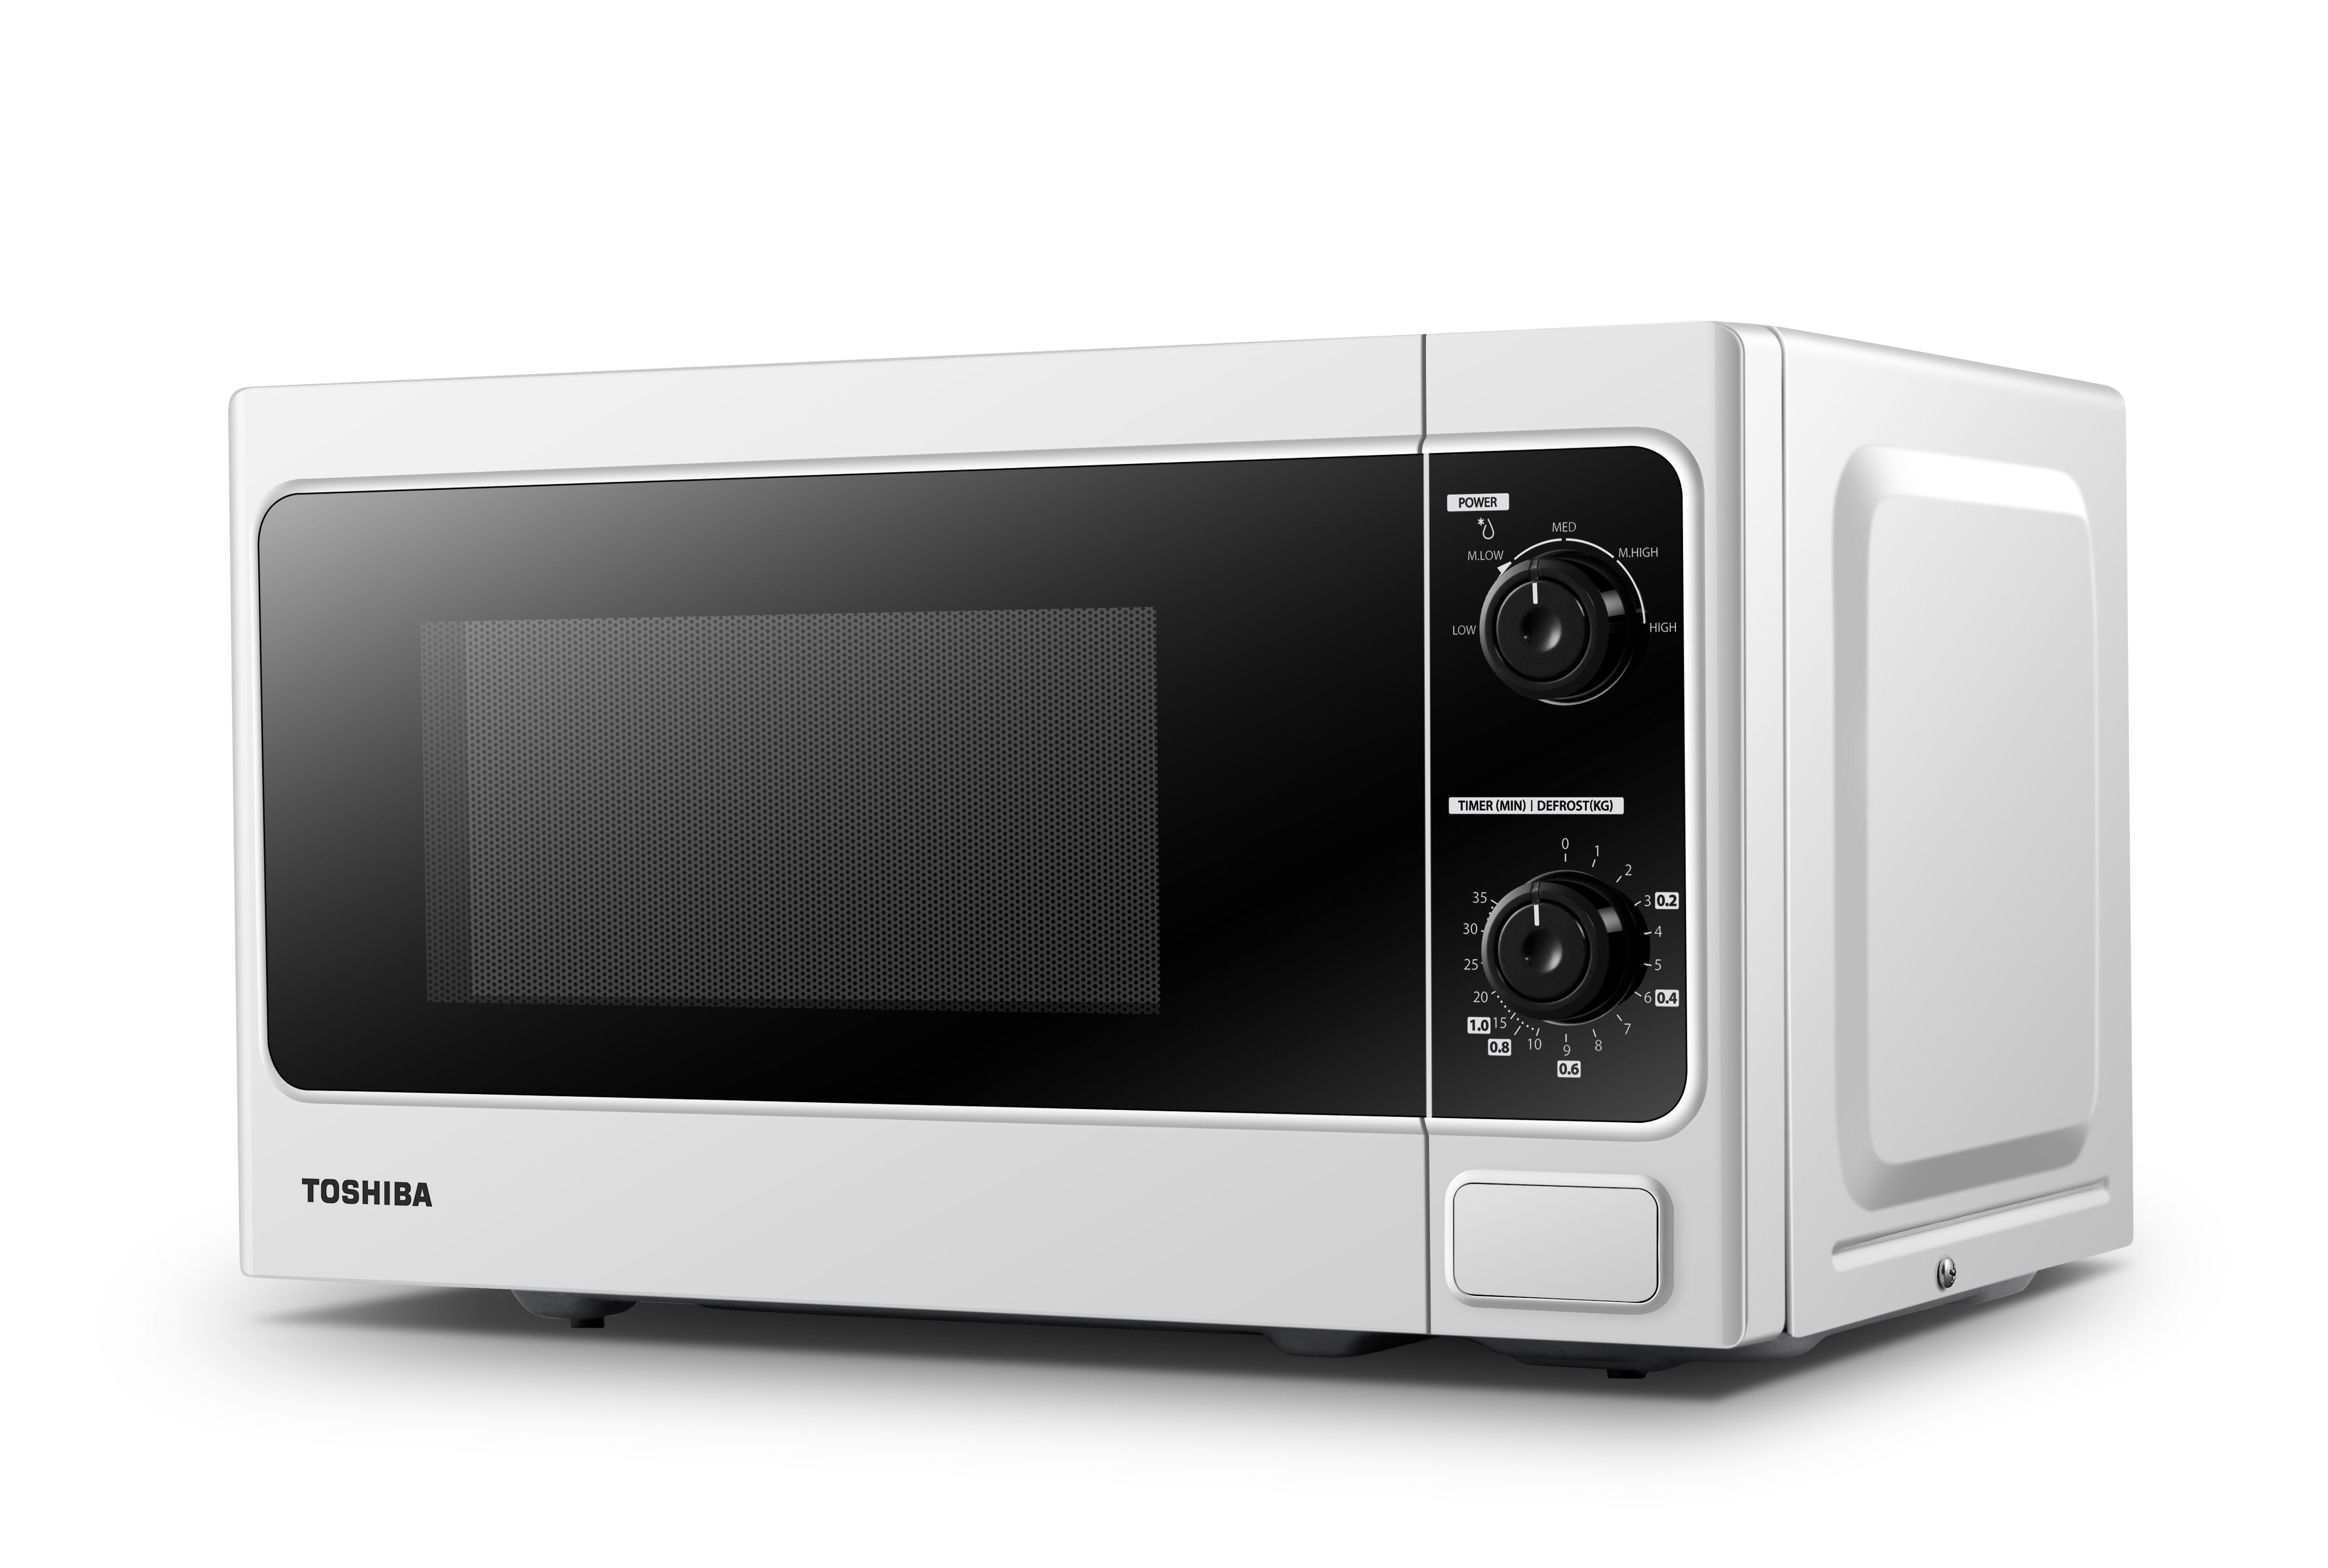 Toshiba 20L Manual Microwave Oven